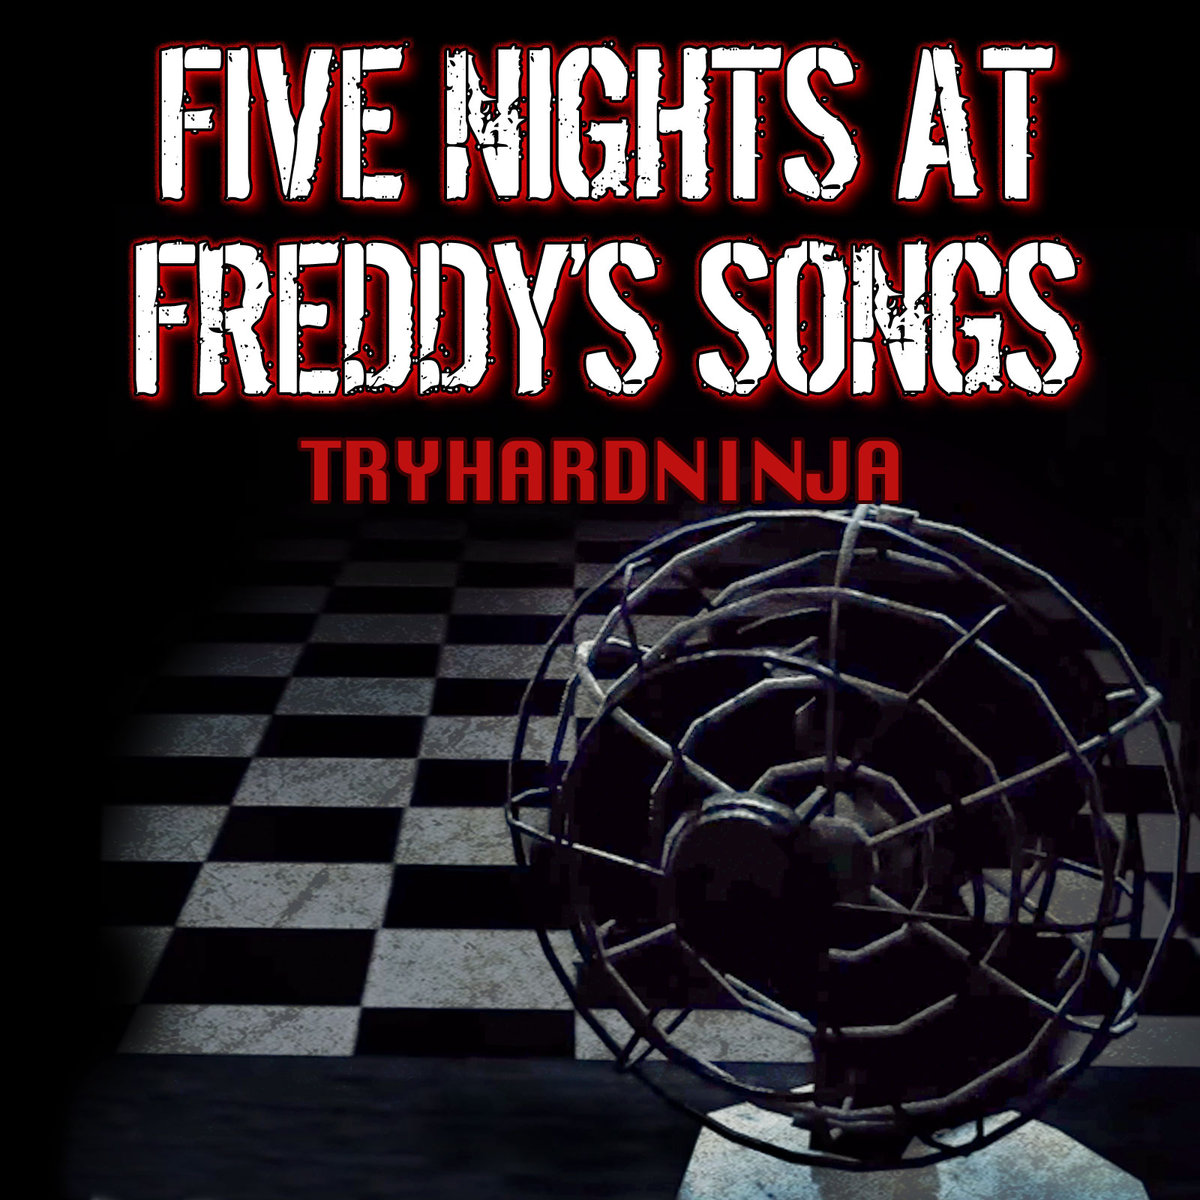 N1ke_Gmes - Five Nights at Freddy's песня на русском